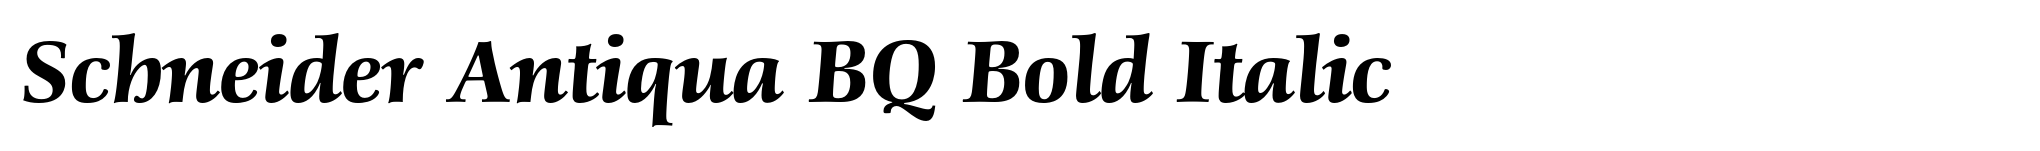 Schneider Antiqua BQ Bold Italic image